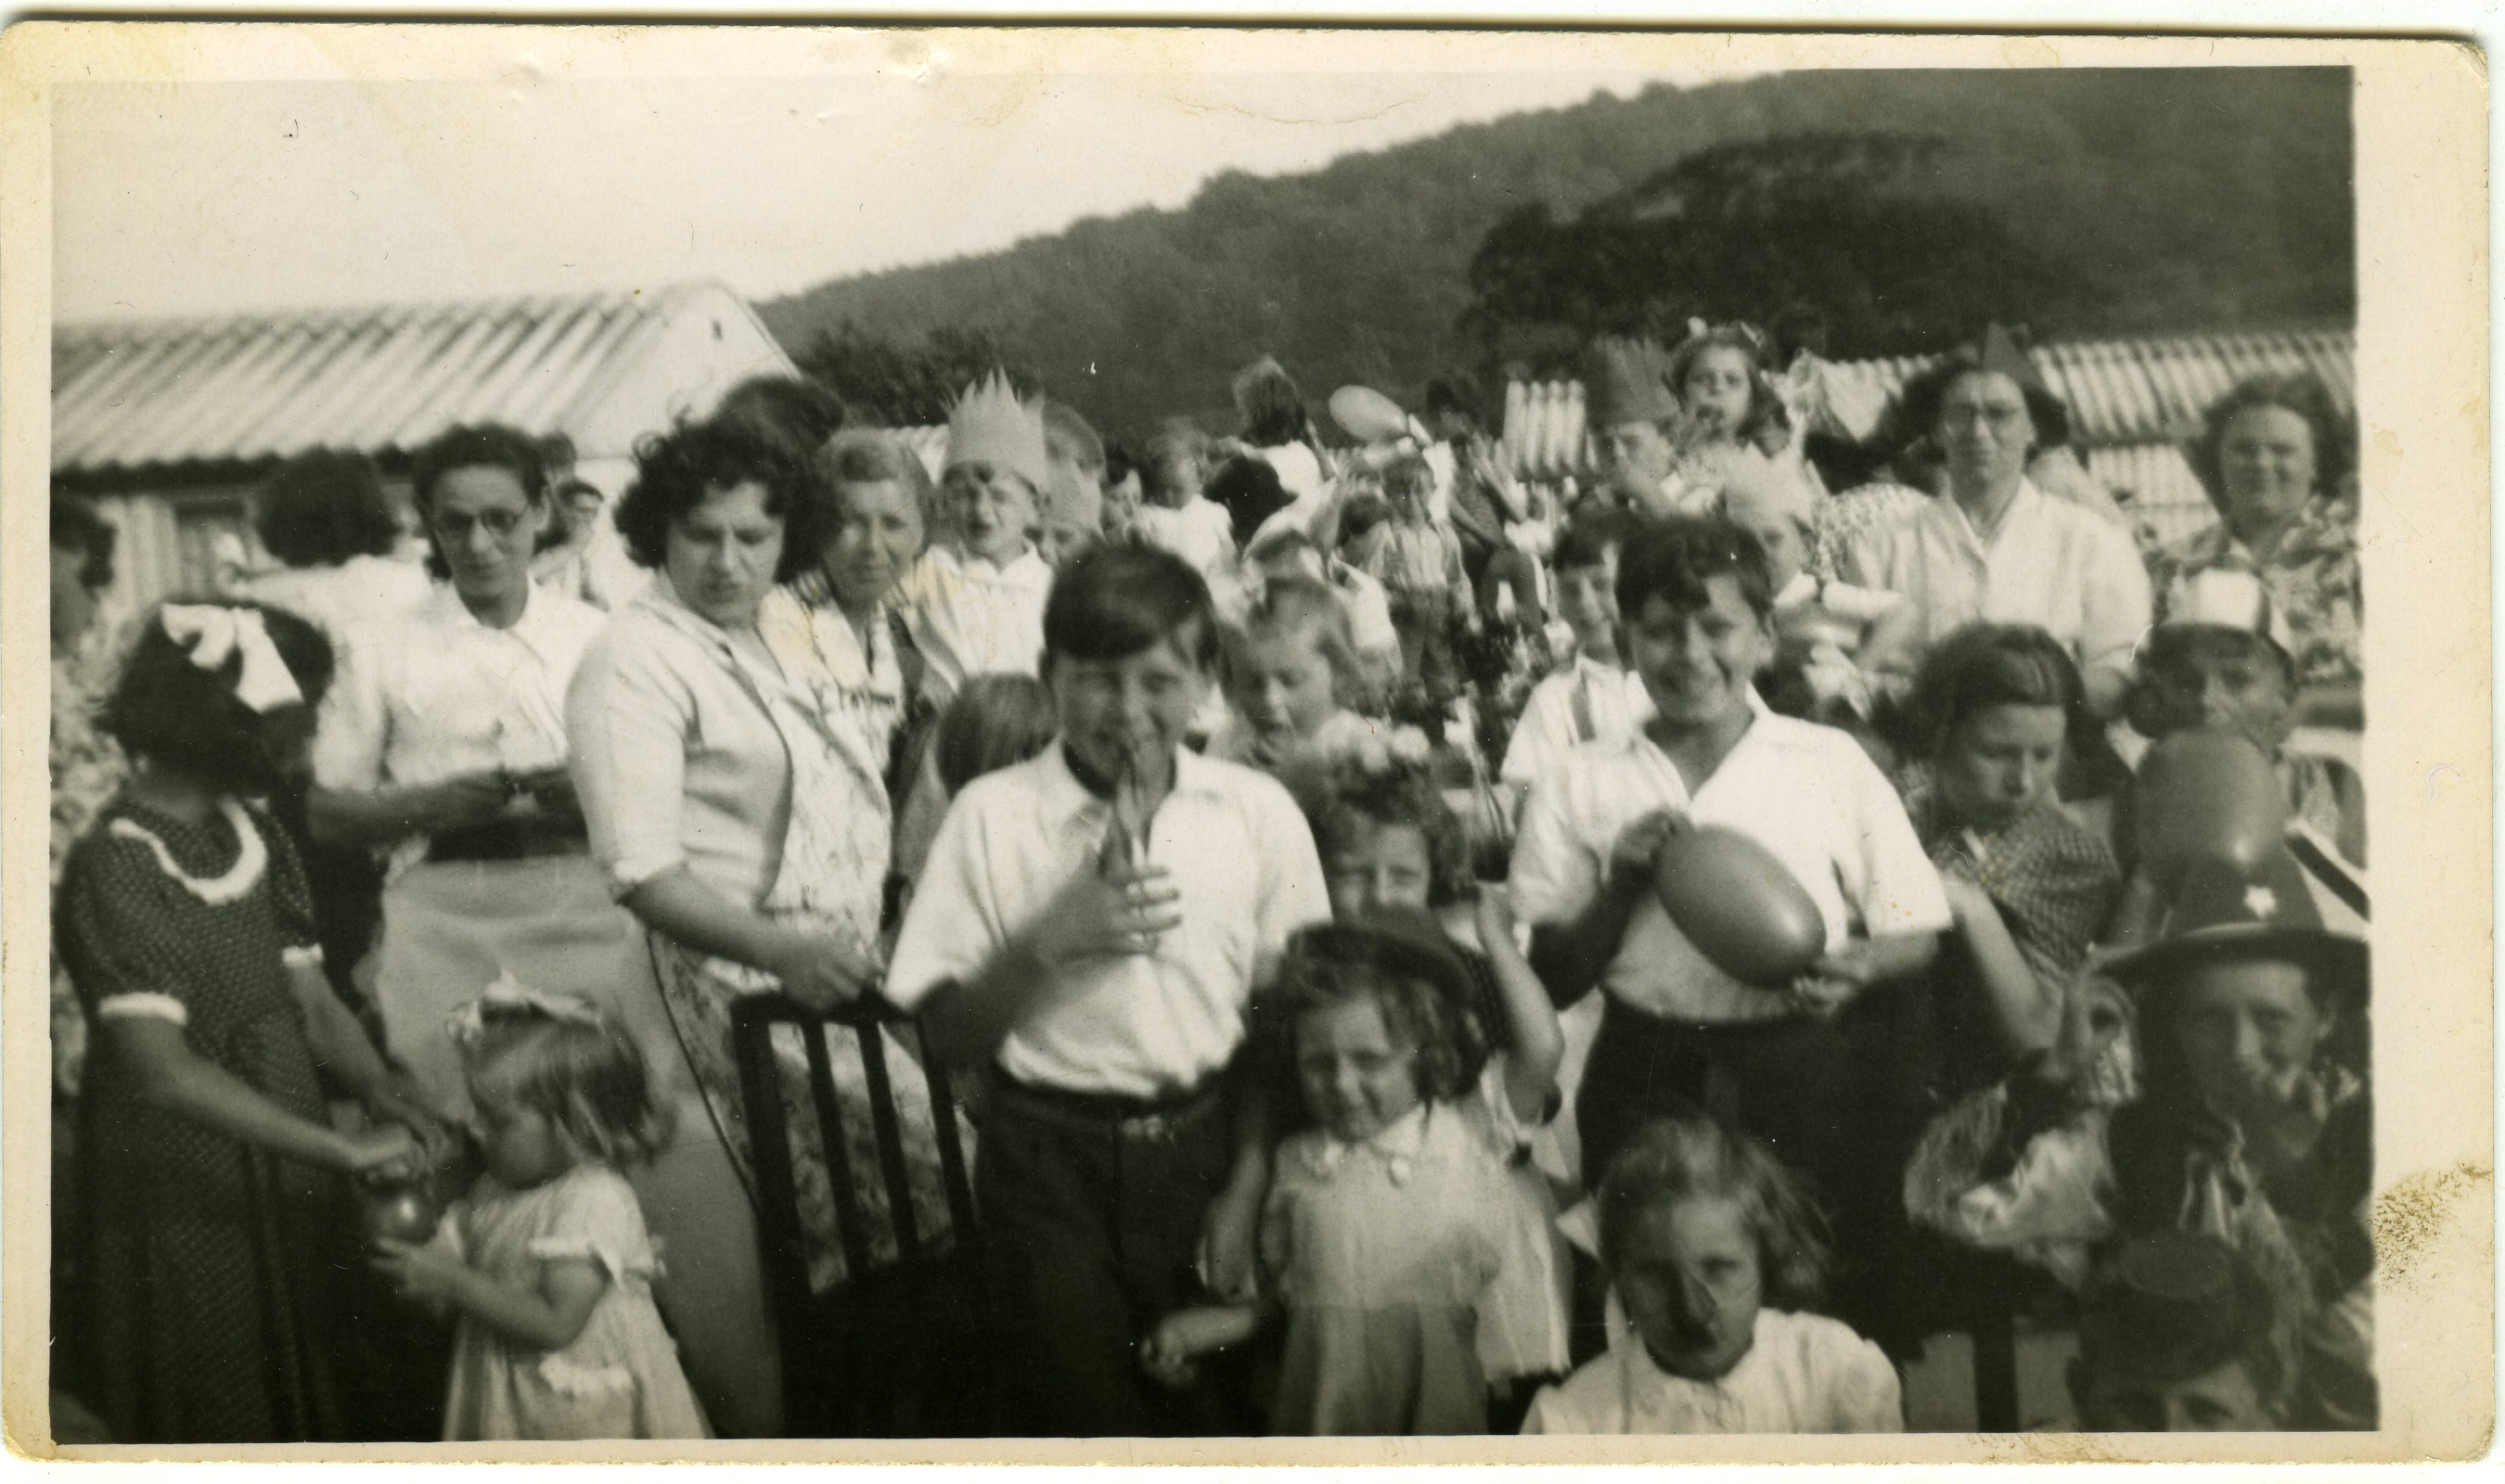 Coronation street party on the Treberth Estate, Newport, Wales, 1954